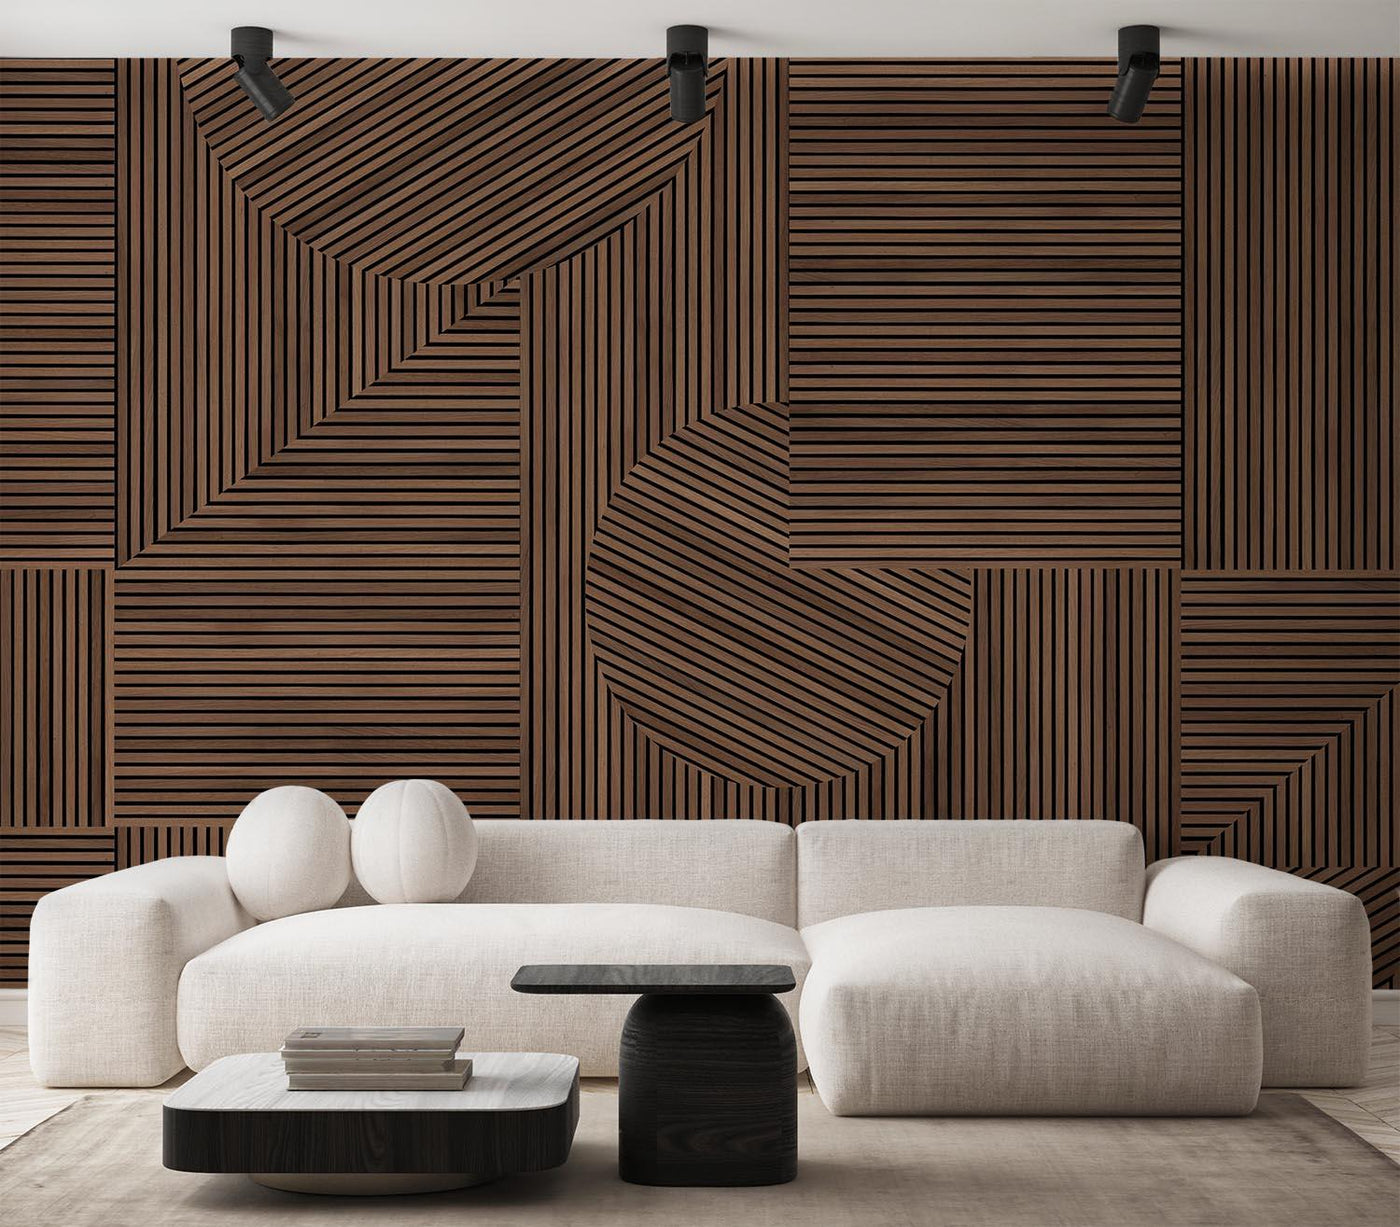 Wood wallpapers for a nordic interior. Rib wood panels, wood wall art for a warm japandi interior, Japandi wall murals for an organic modern interior